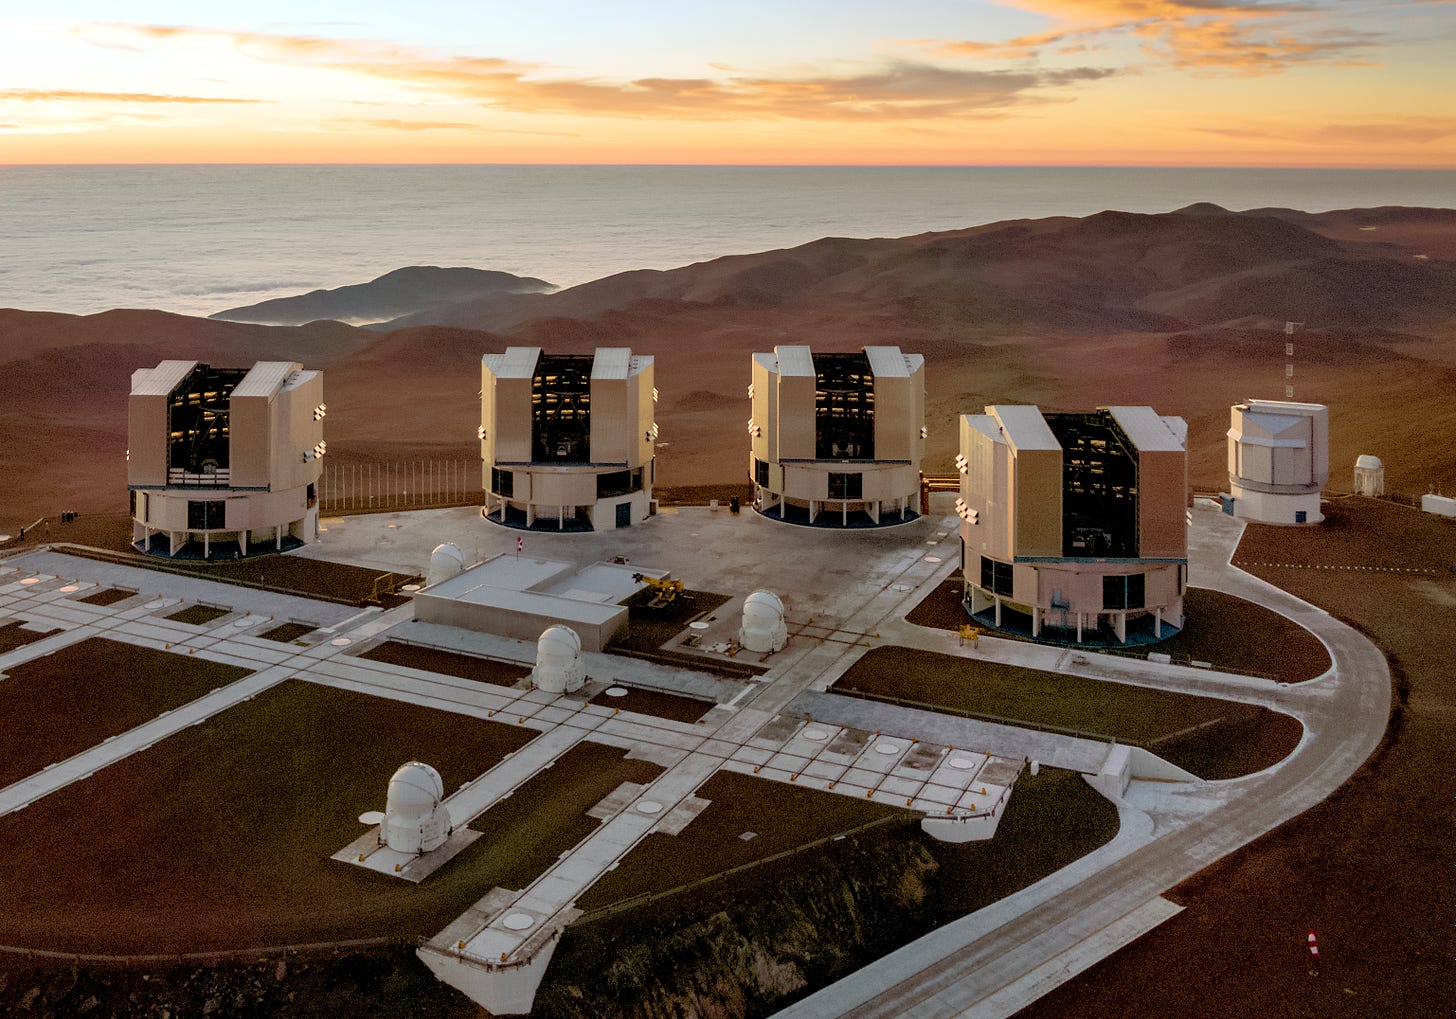 Very Large Telescope - Wikipedia